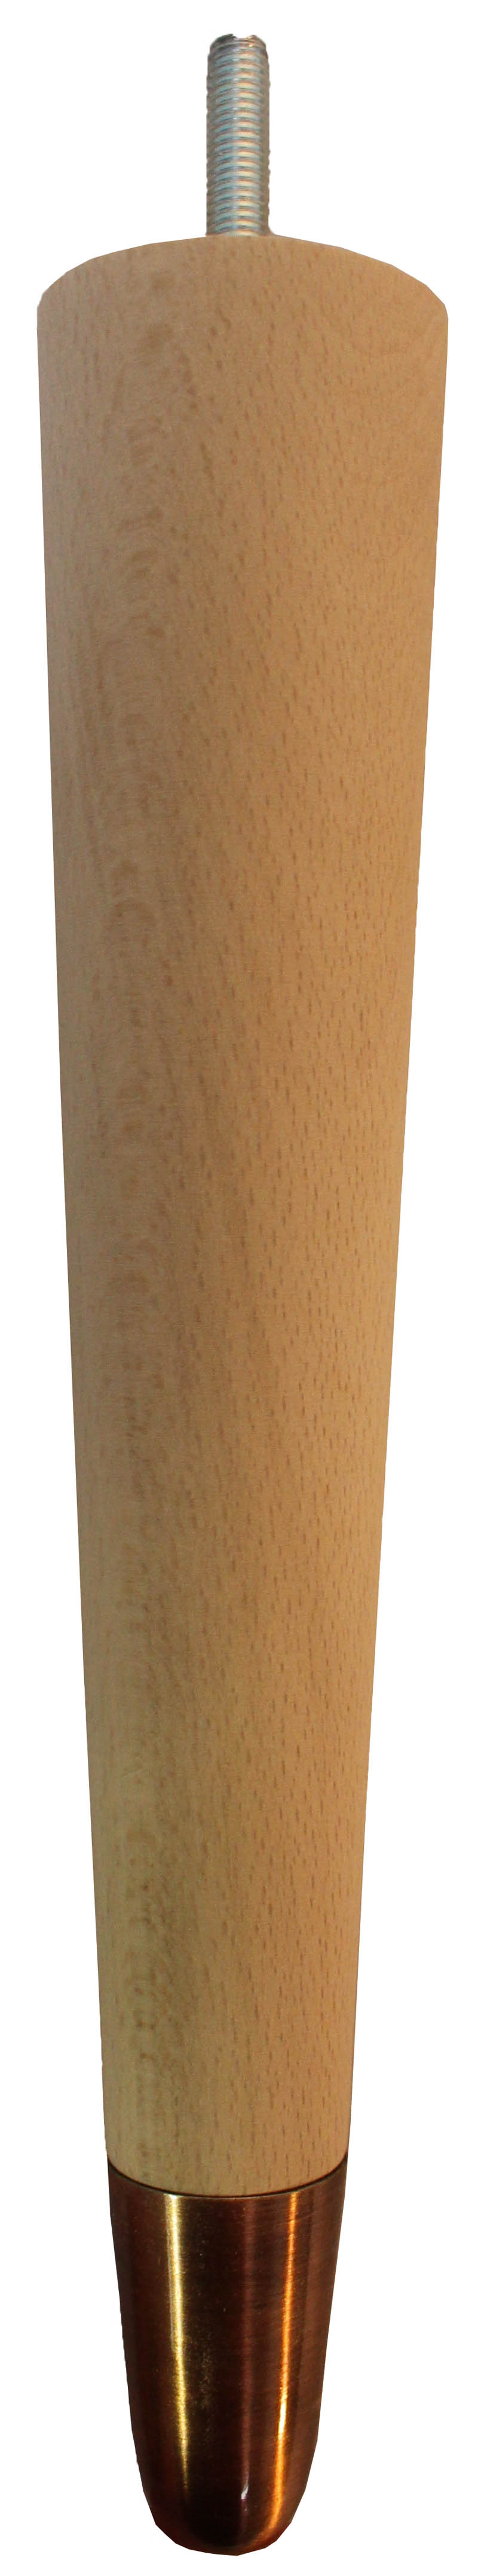 Nina Tapered Furniture Legs - Raw Finish - Oiled Bronze Slipper Cups - Set of 4